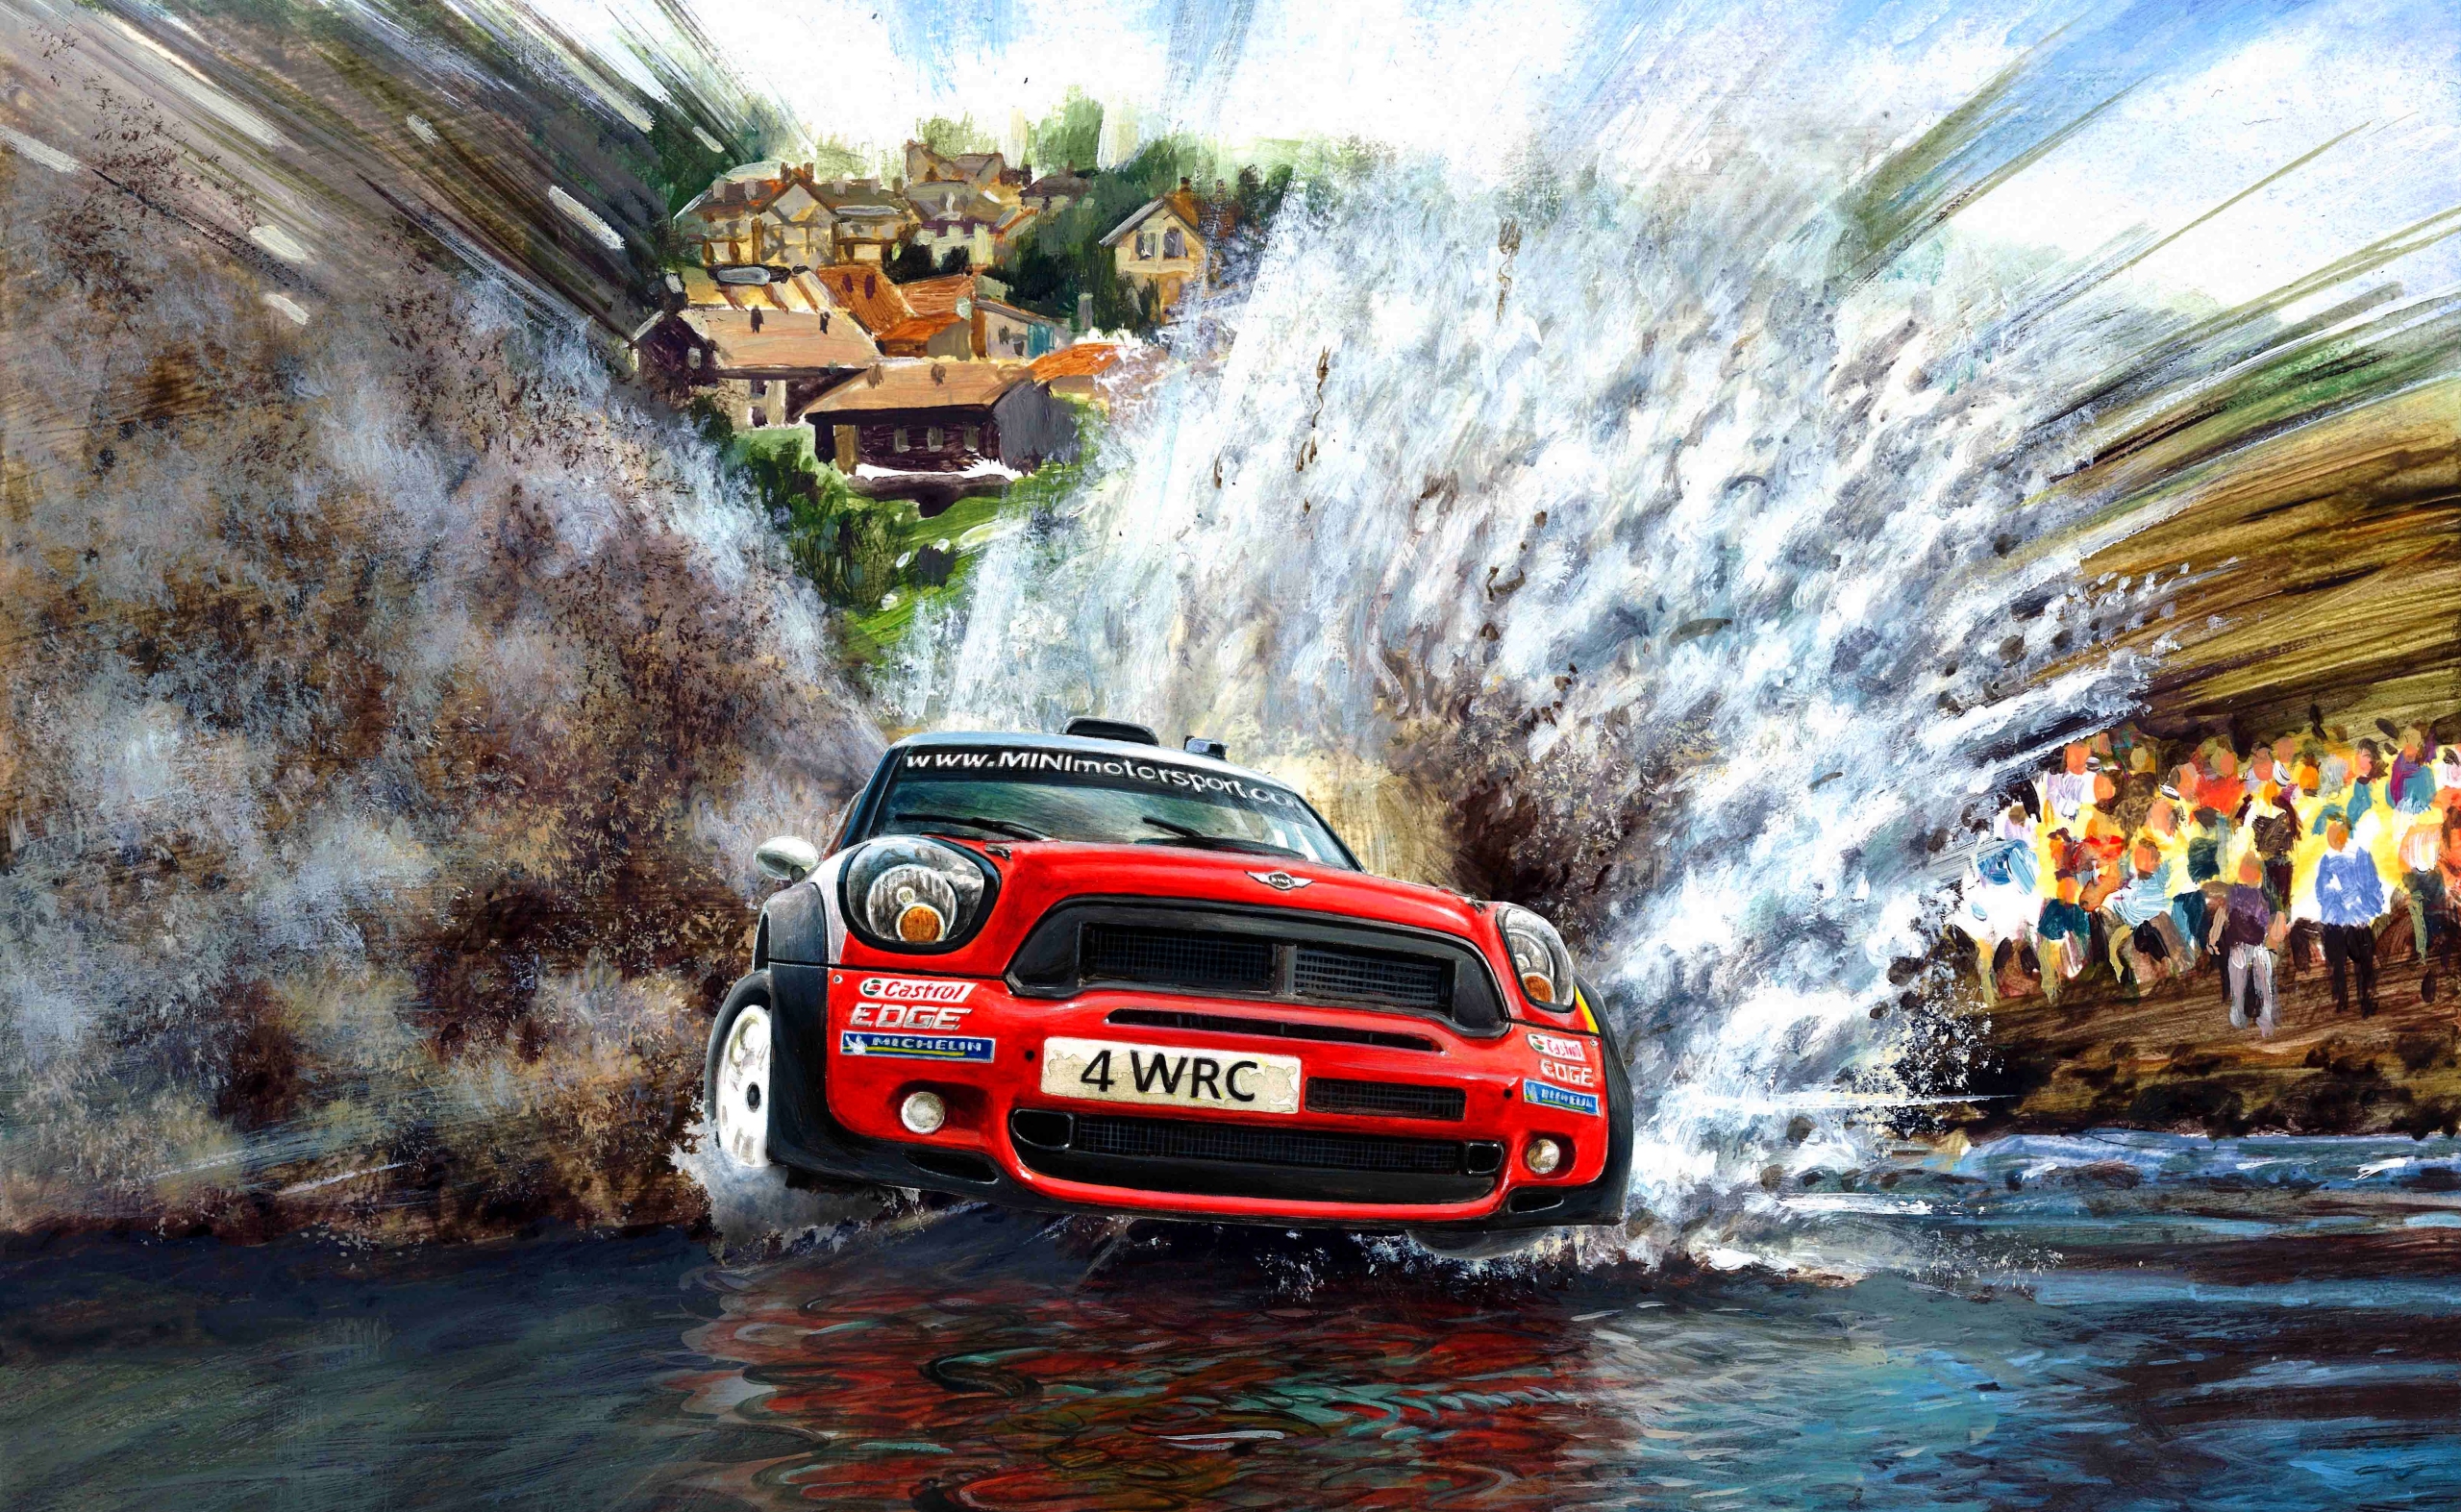 Artwork Water Car Rally Racing Vehicle Mini Cooper Wrc 2560x1573